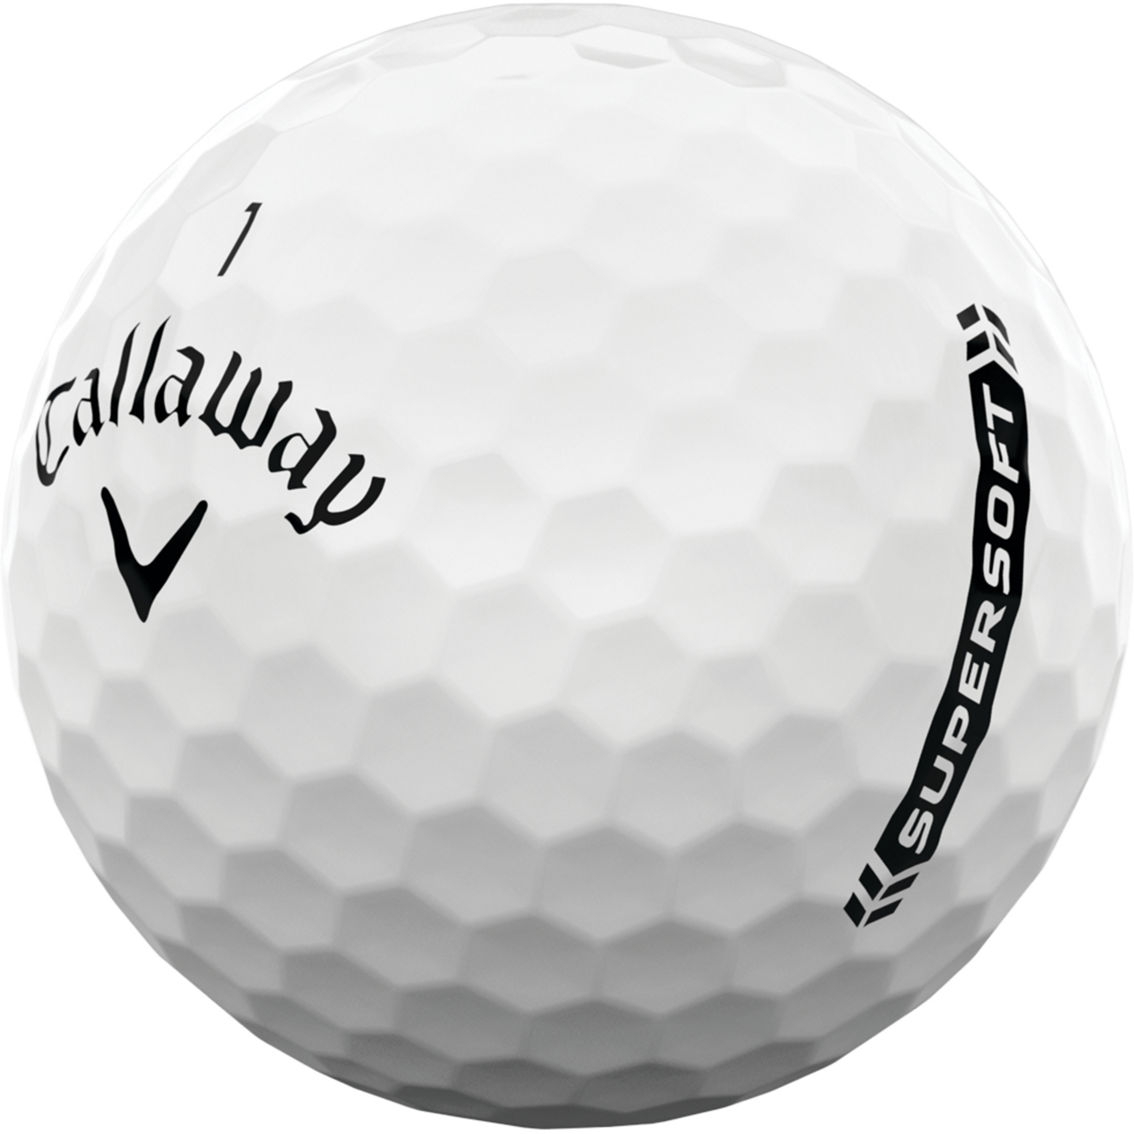 Callaway Supersoft Golf Balls - Image 2 of 2